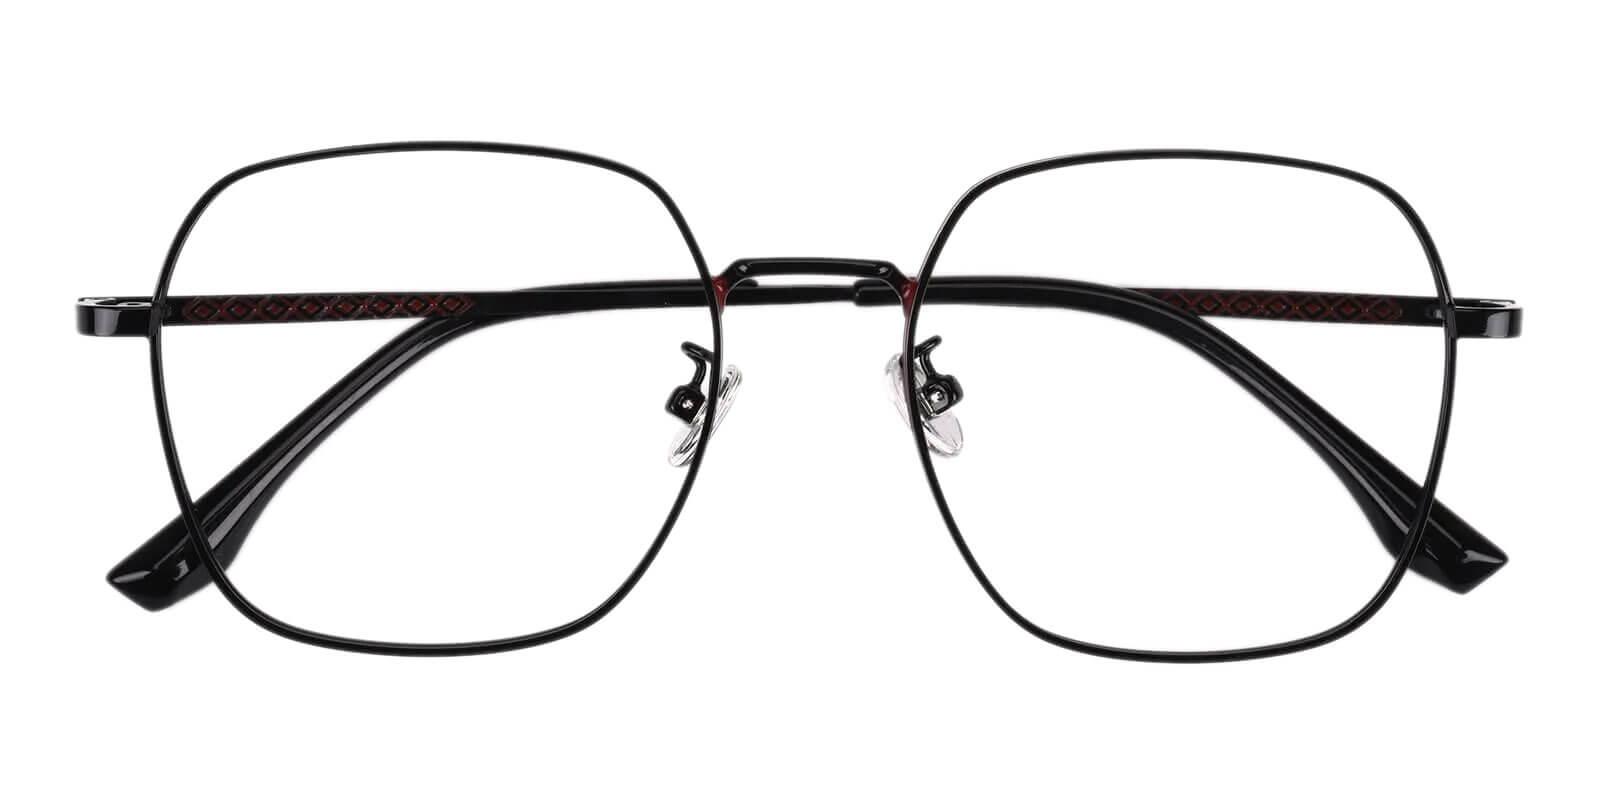 Thelma Black Metal Eyeglasses , NosePads , SpringHinges Frames from ABBE Glasses